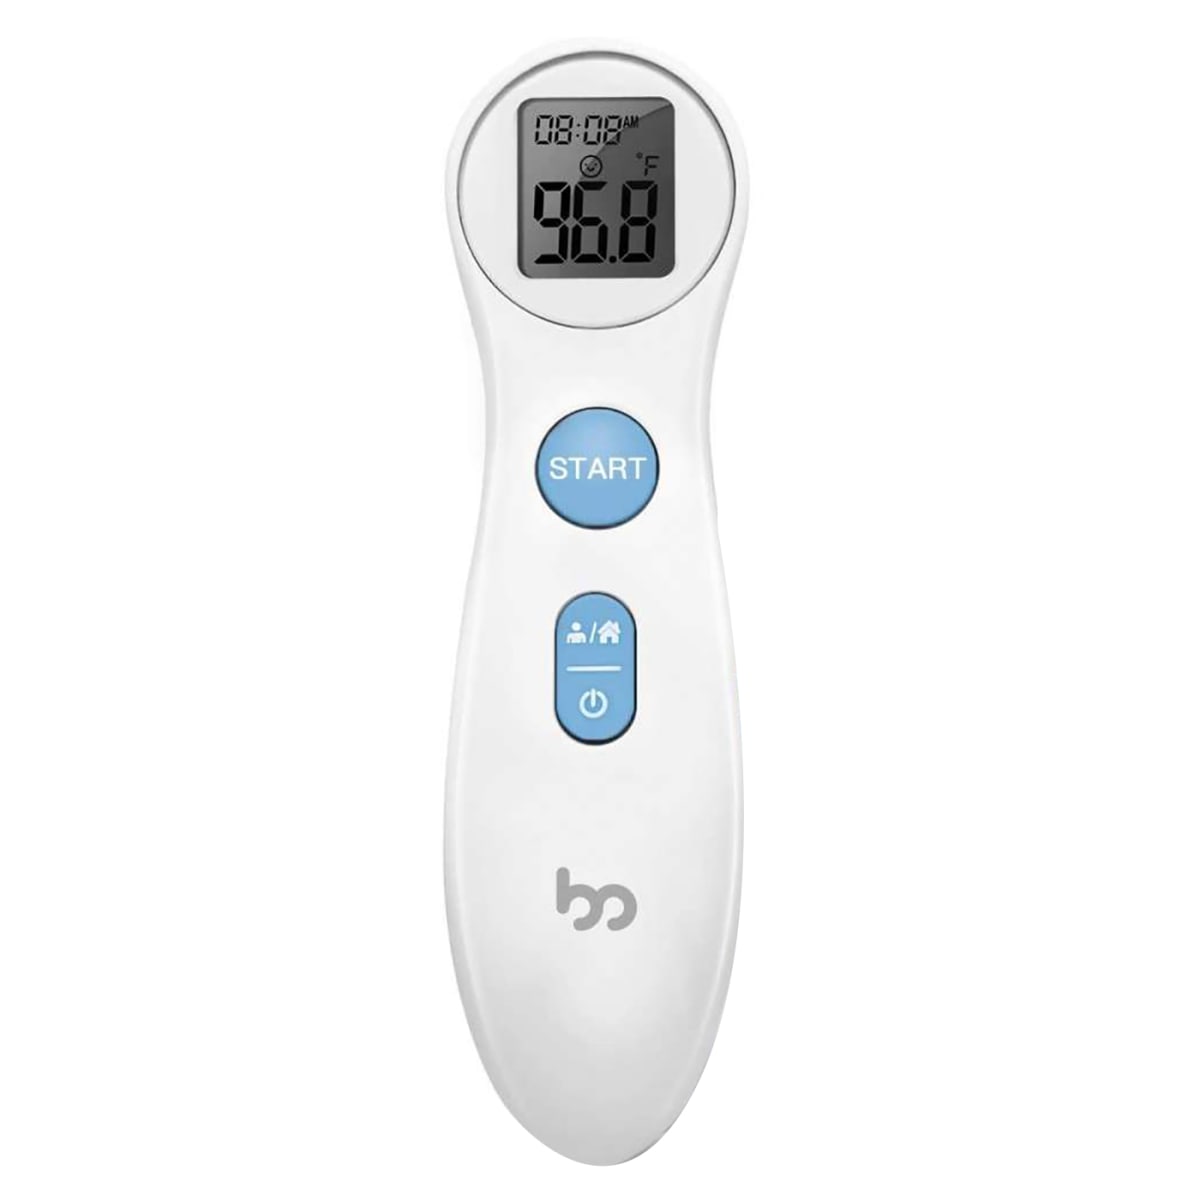 Infrared Thermometers for sale in Atlanta, Georgia